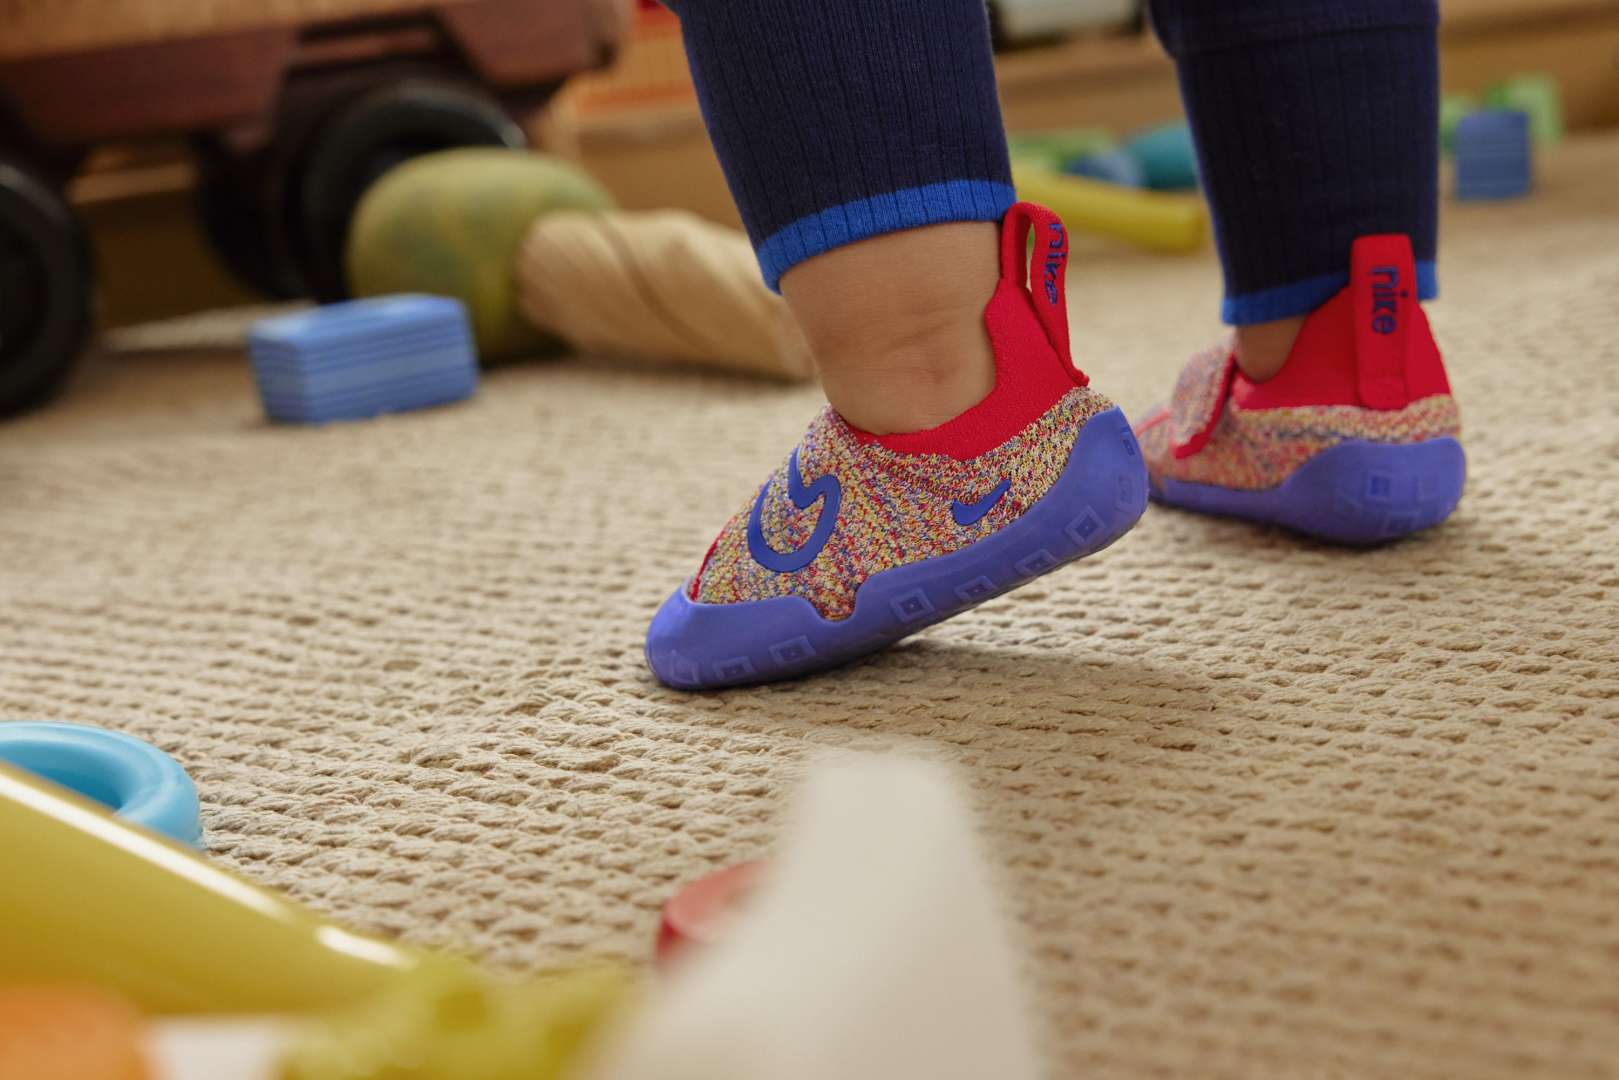 Toddler's feet in Nike Swoosh 1s walking in playroom